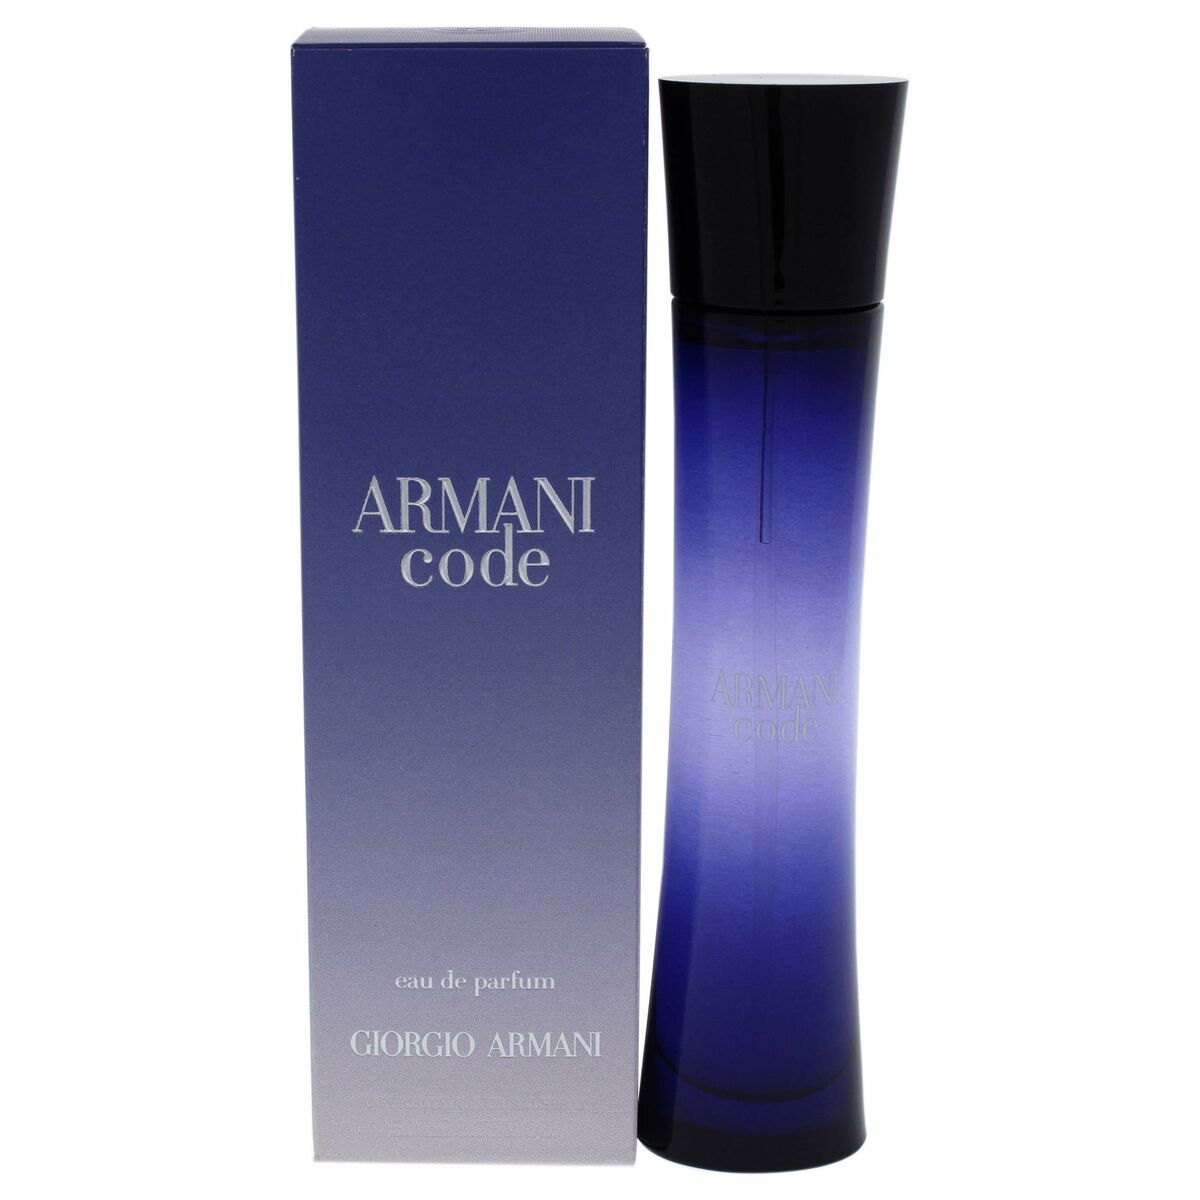 Kaufe Armani Armani Code EDP 50 ml - Damen bei AWK Flagship um € 99.00